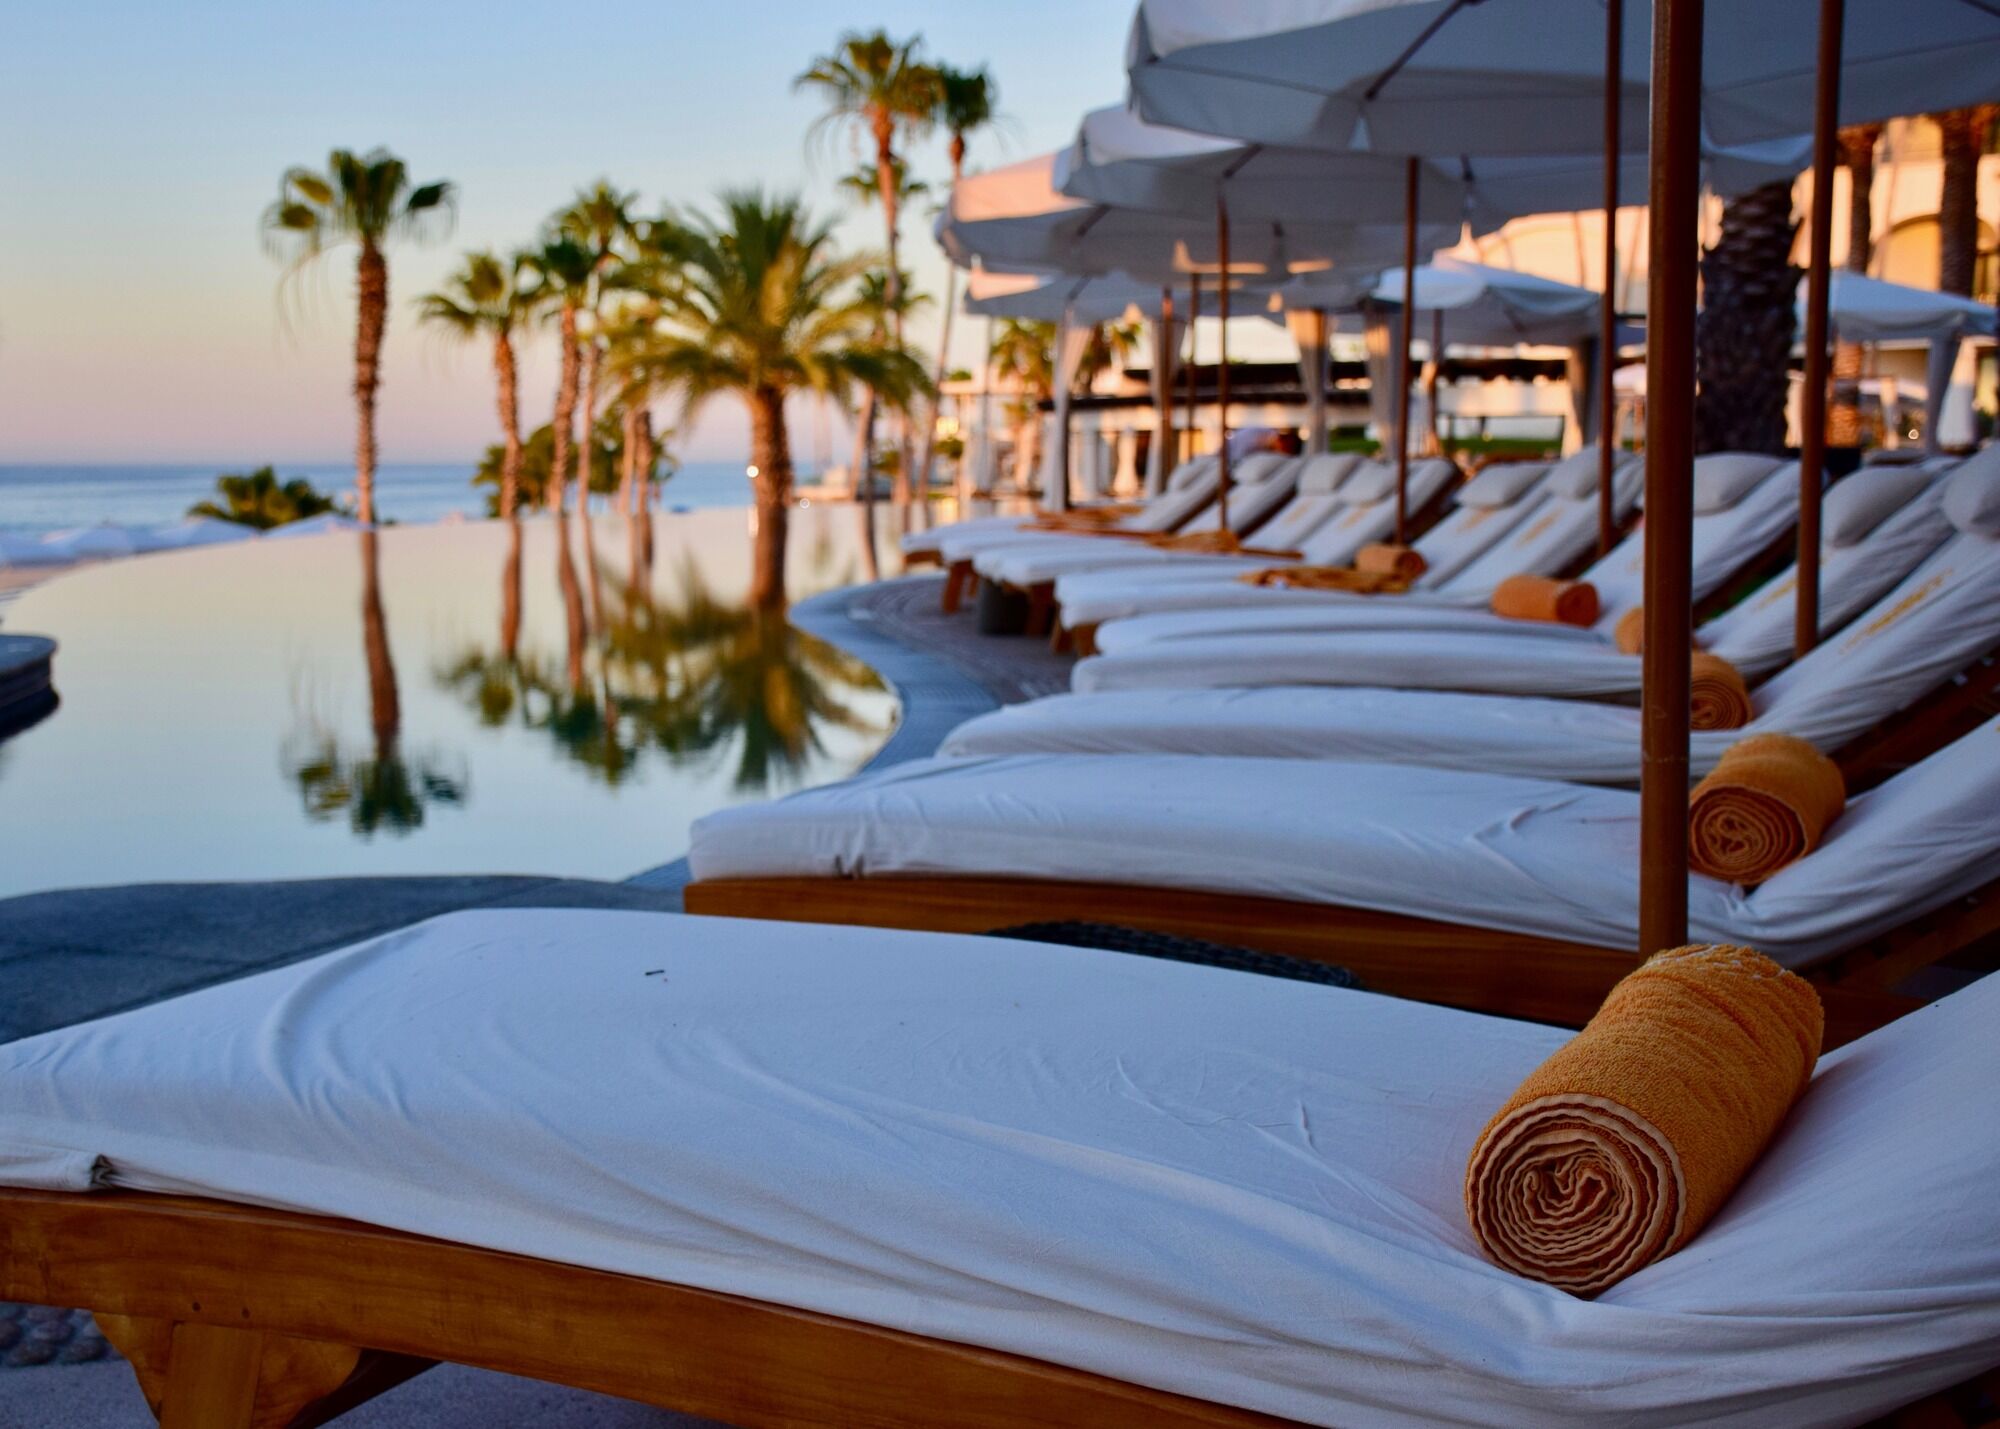 Royal Kona Resort is often chosen by lovers for an unforgettable weekend away